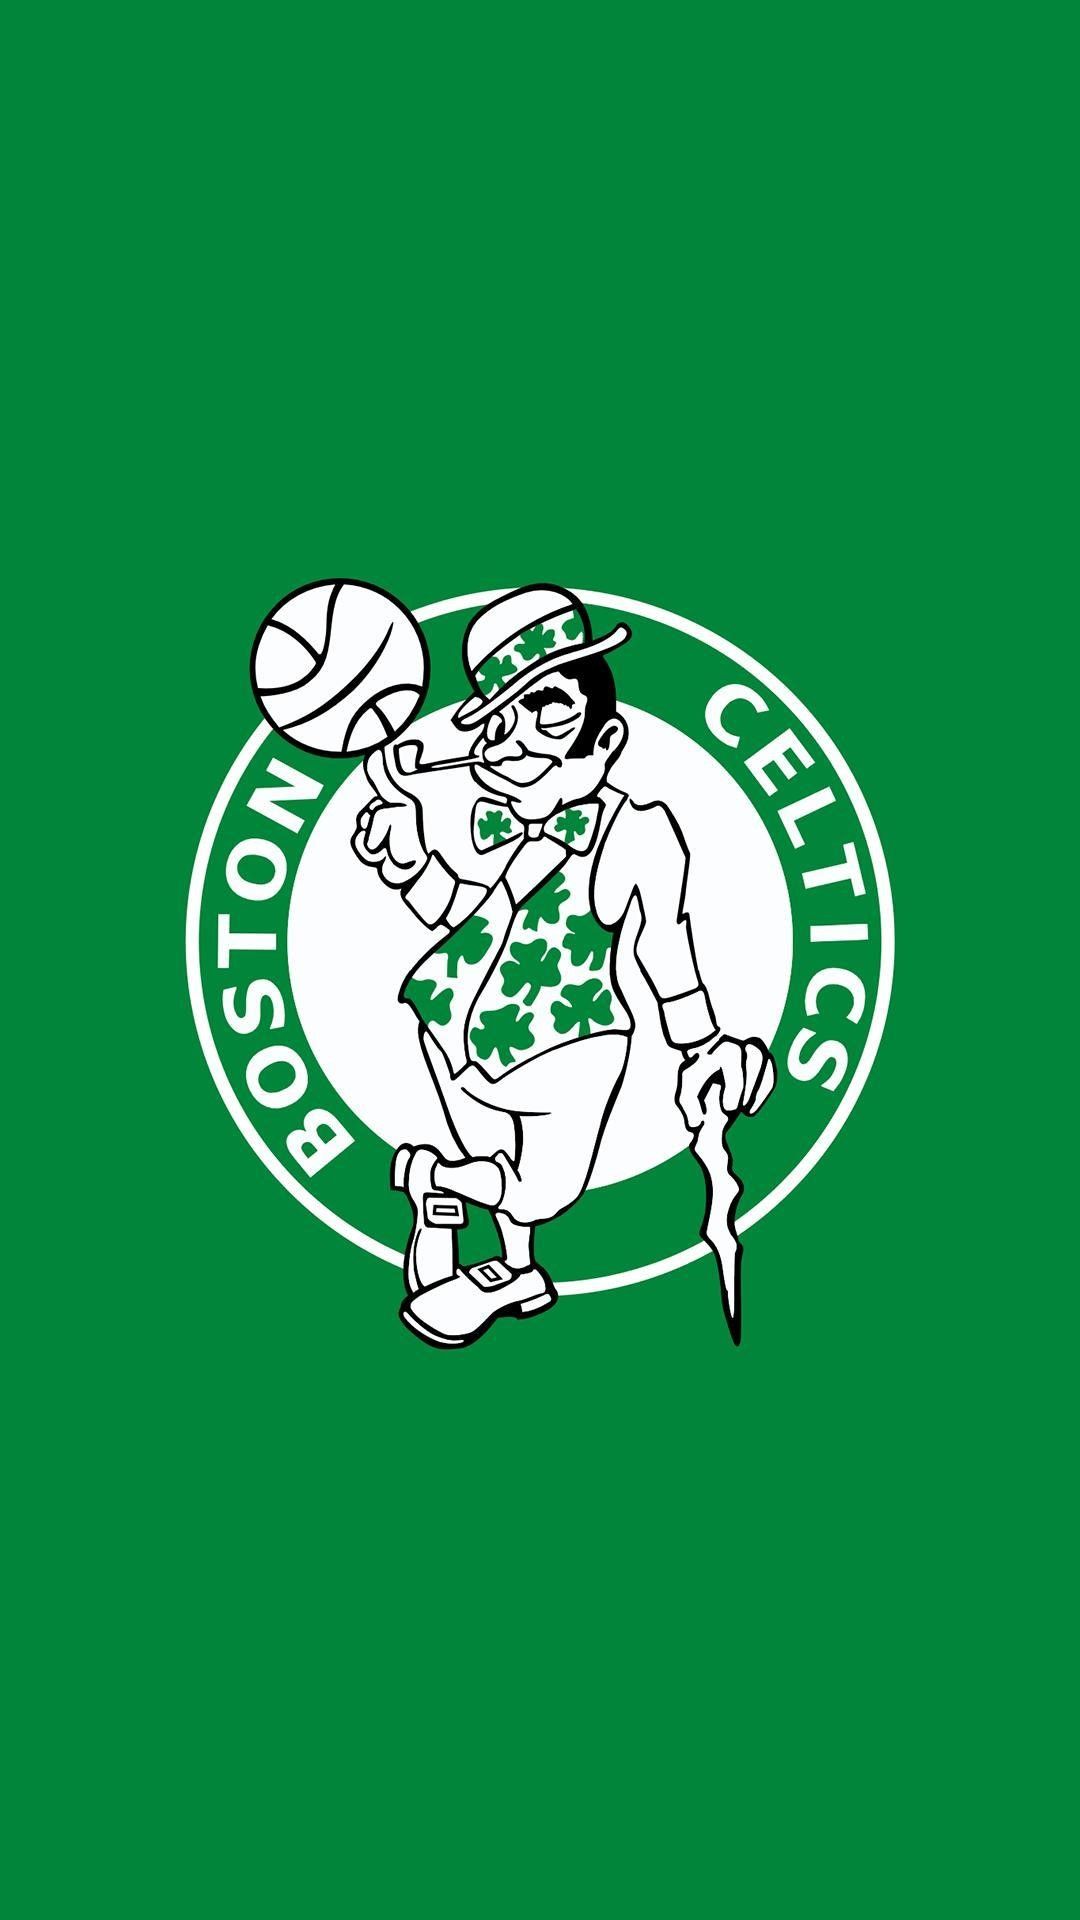 Top 25 Best Boston Celtics iPhone Wallpapers [ 4k & HD Quality ]